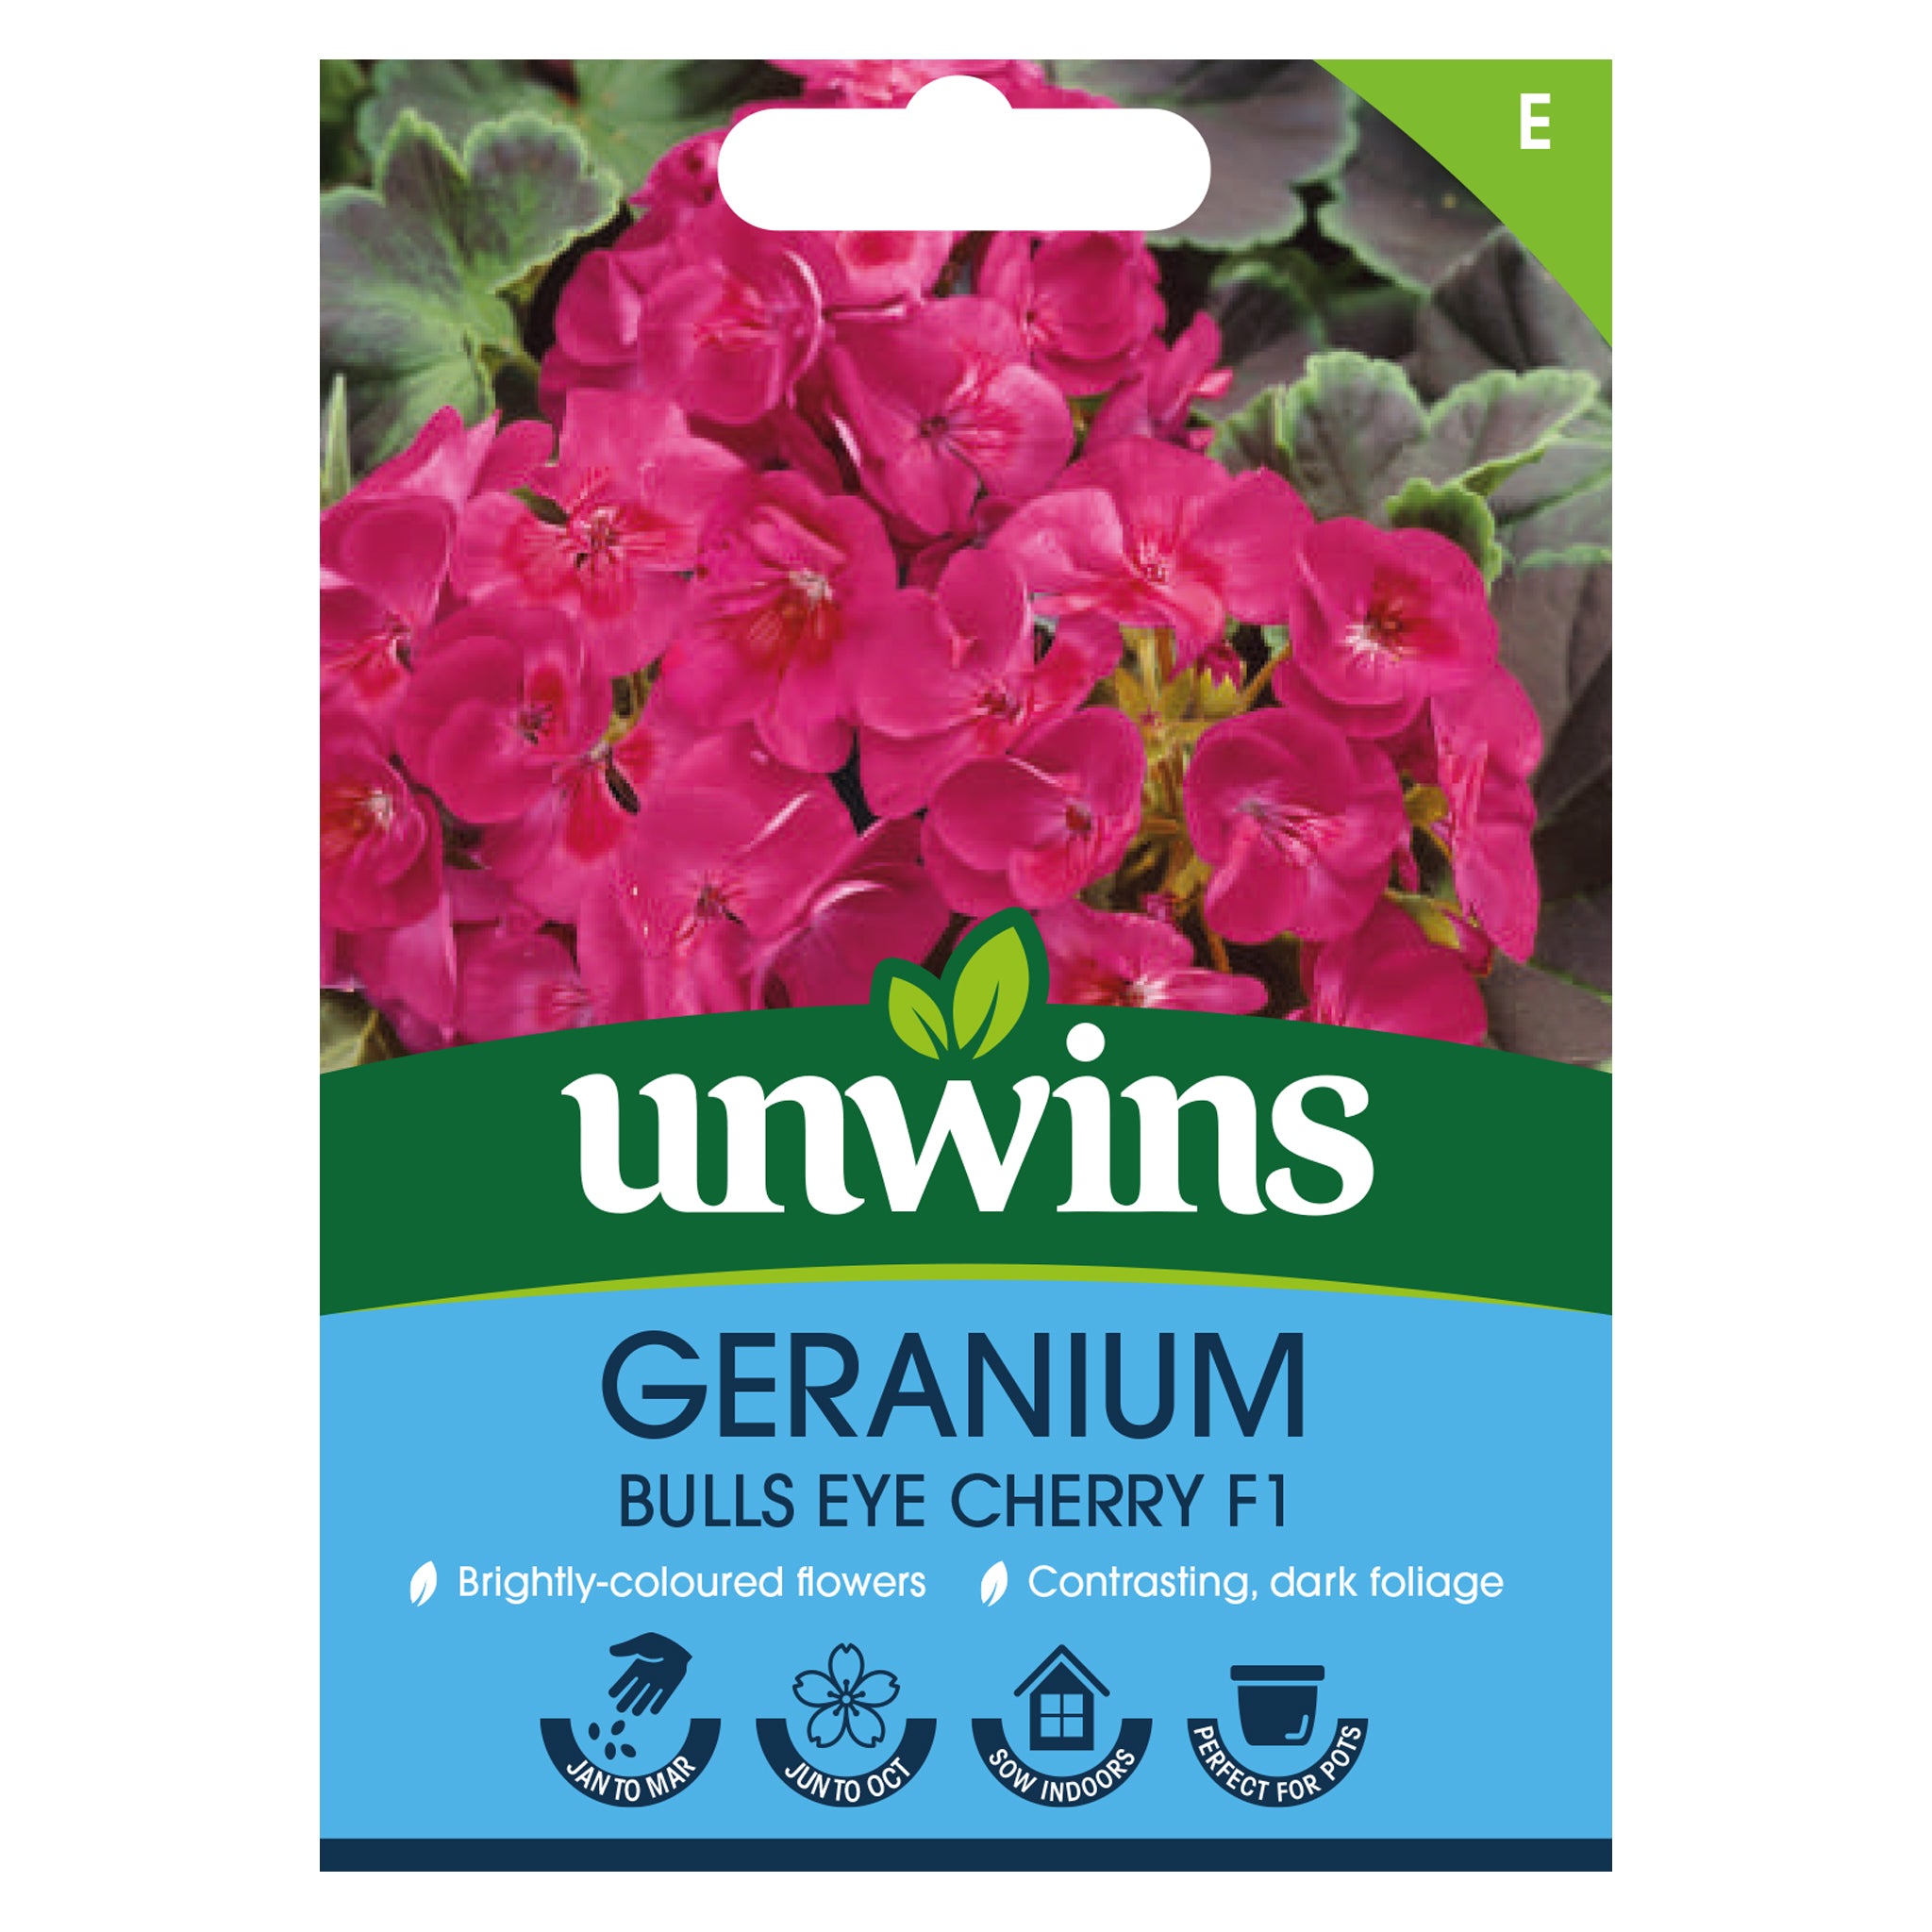 Unwins Geranium Bulls Eye Cherry F1 Seeds